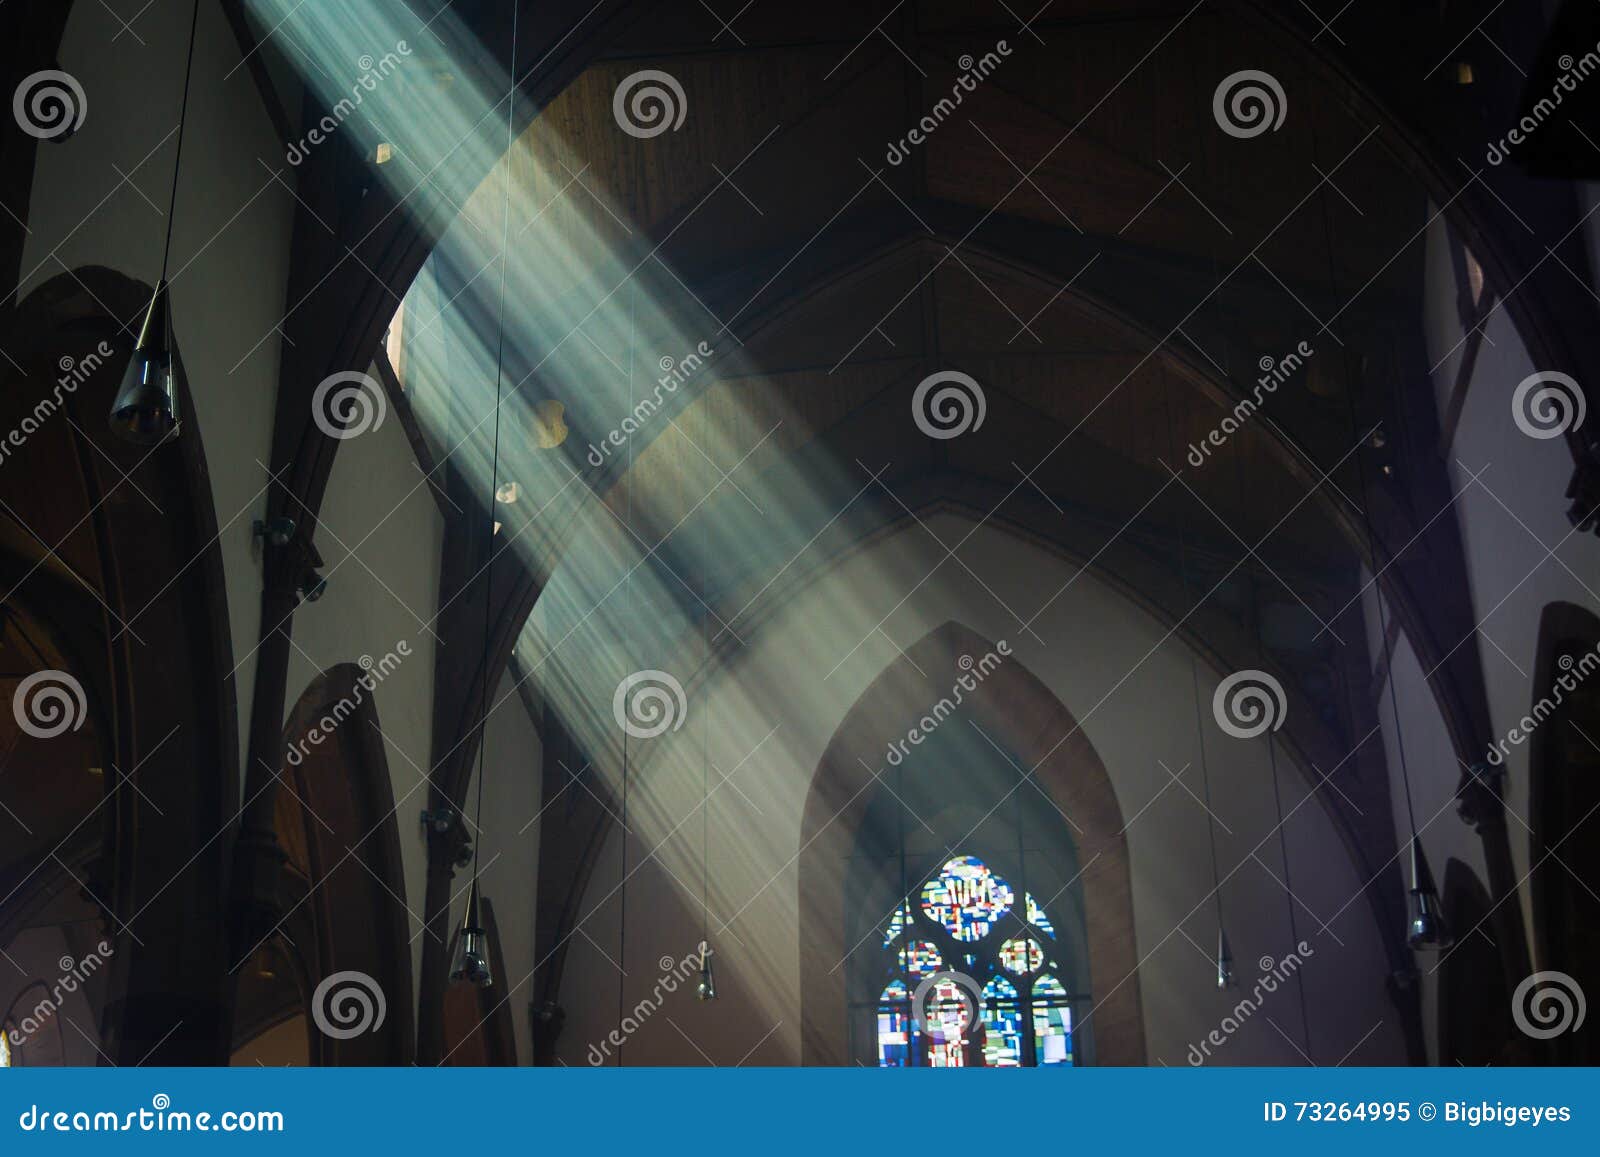 light shafts stream into church window